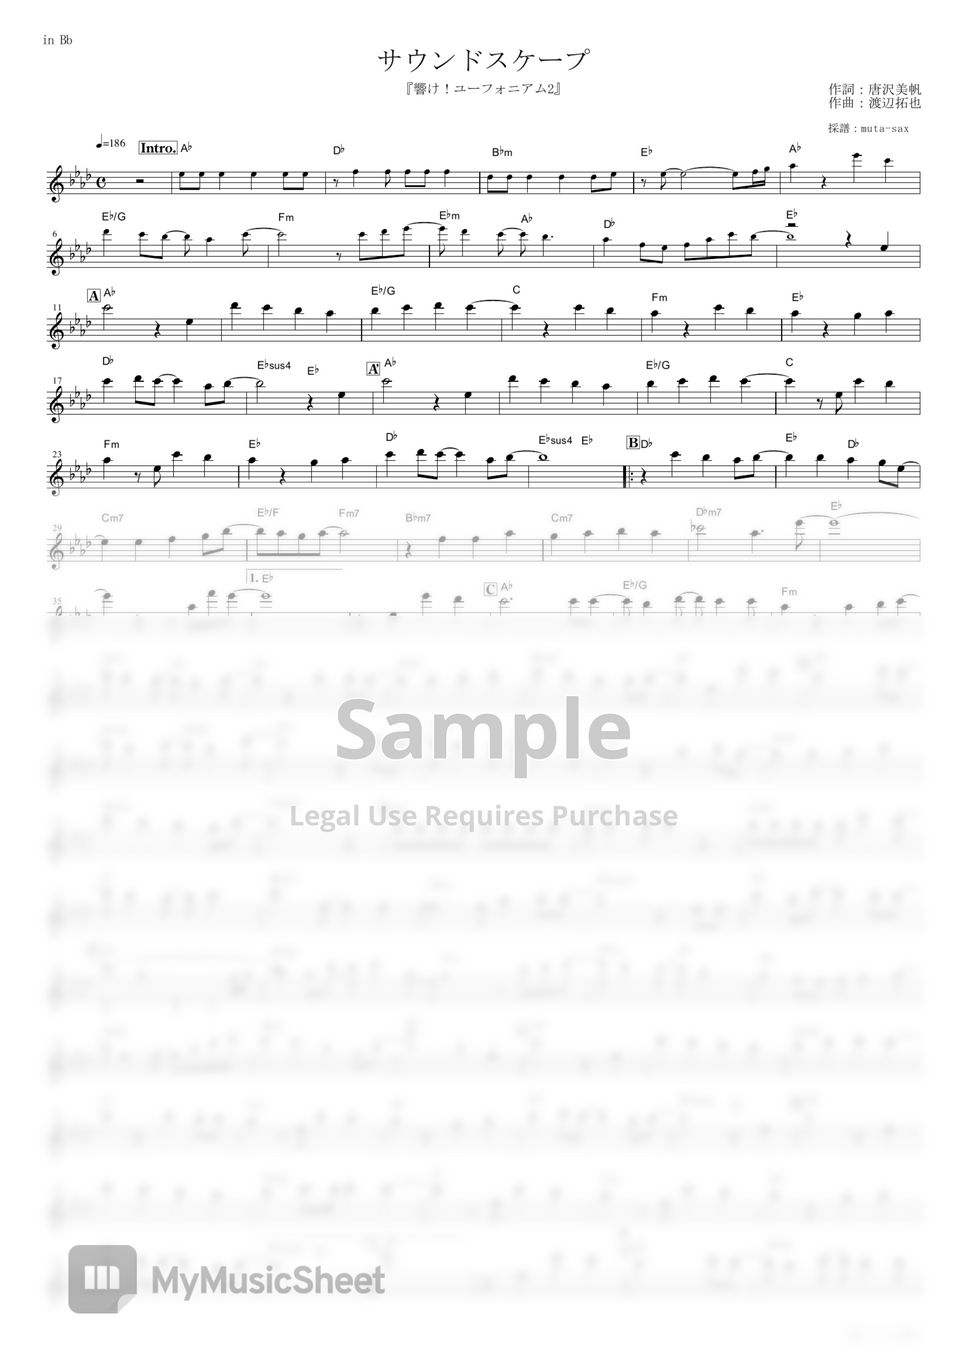 TRUE - Soundscape (Sound! Euphonium 2 / in Bb) by muta-sax